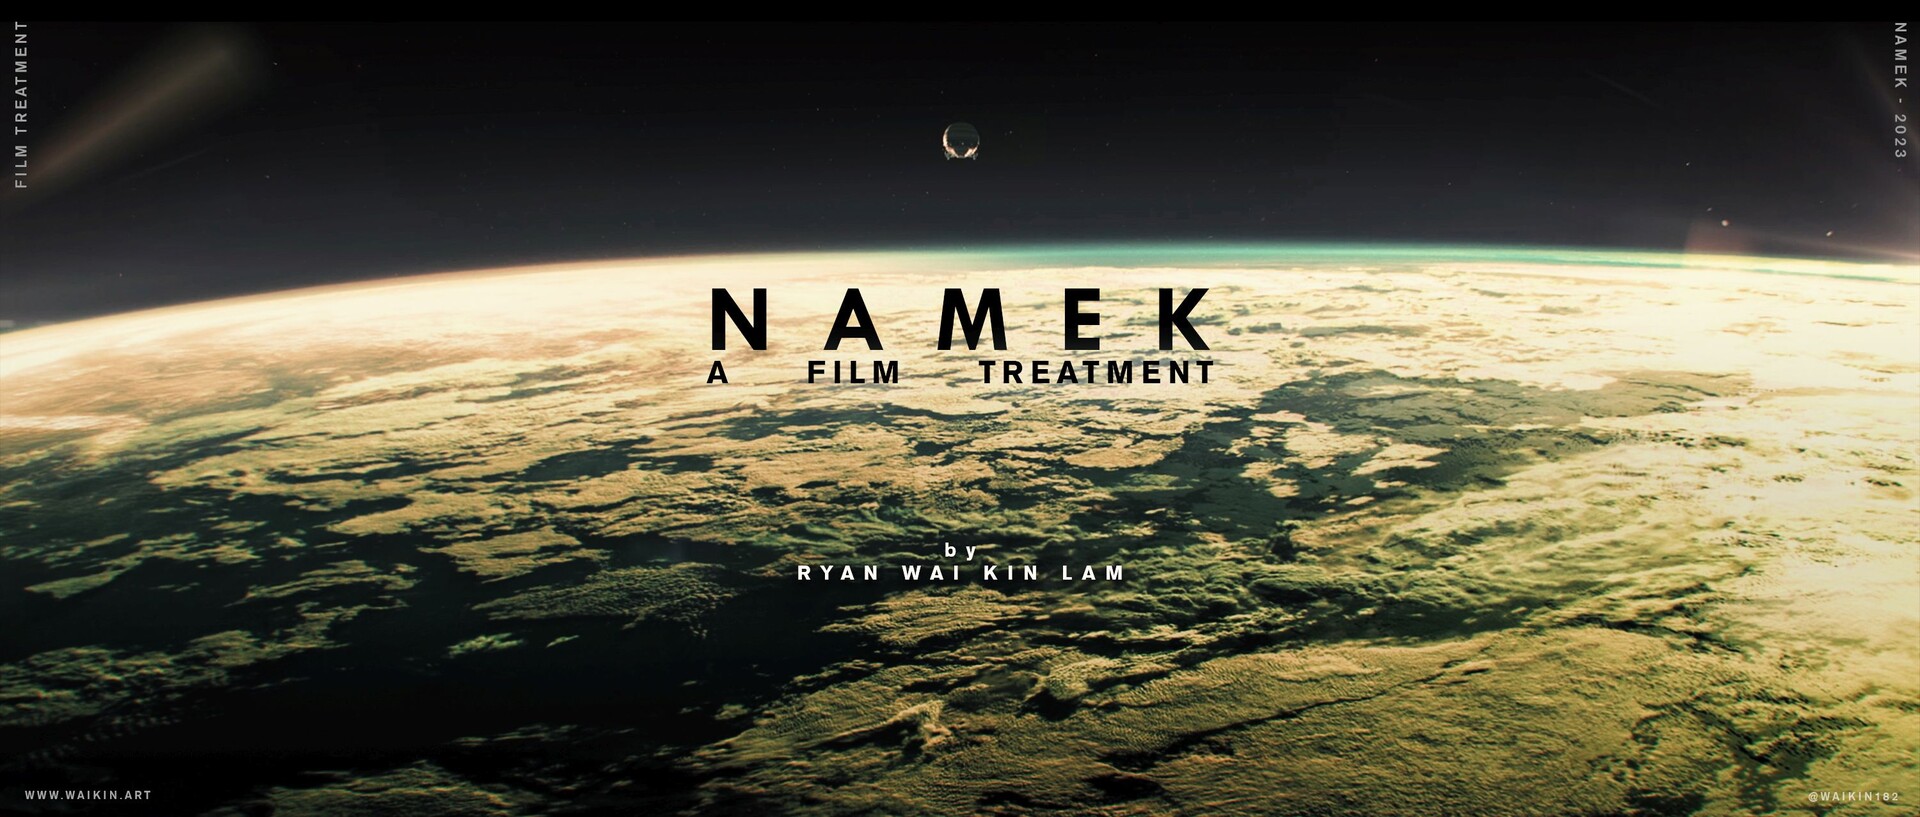 Namek - Film Treatment